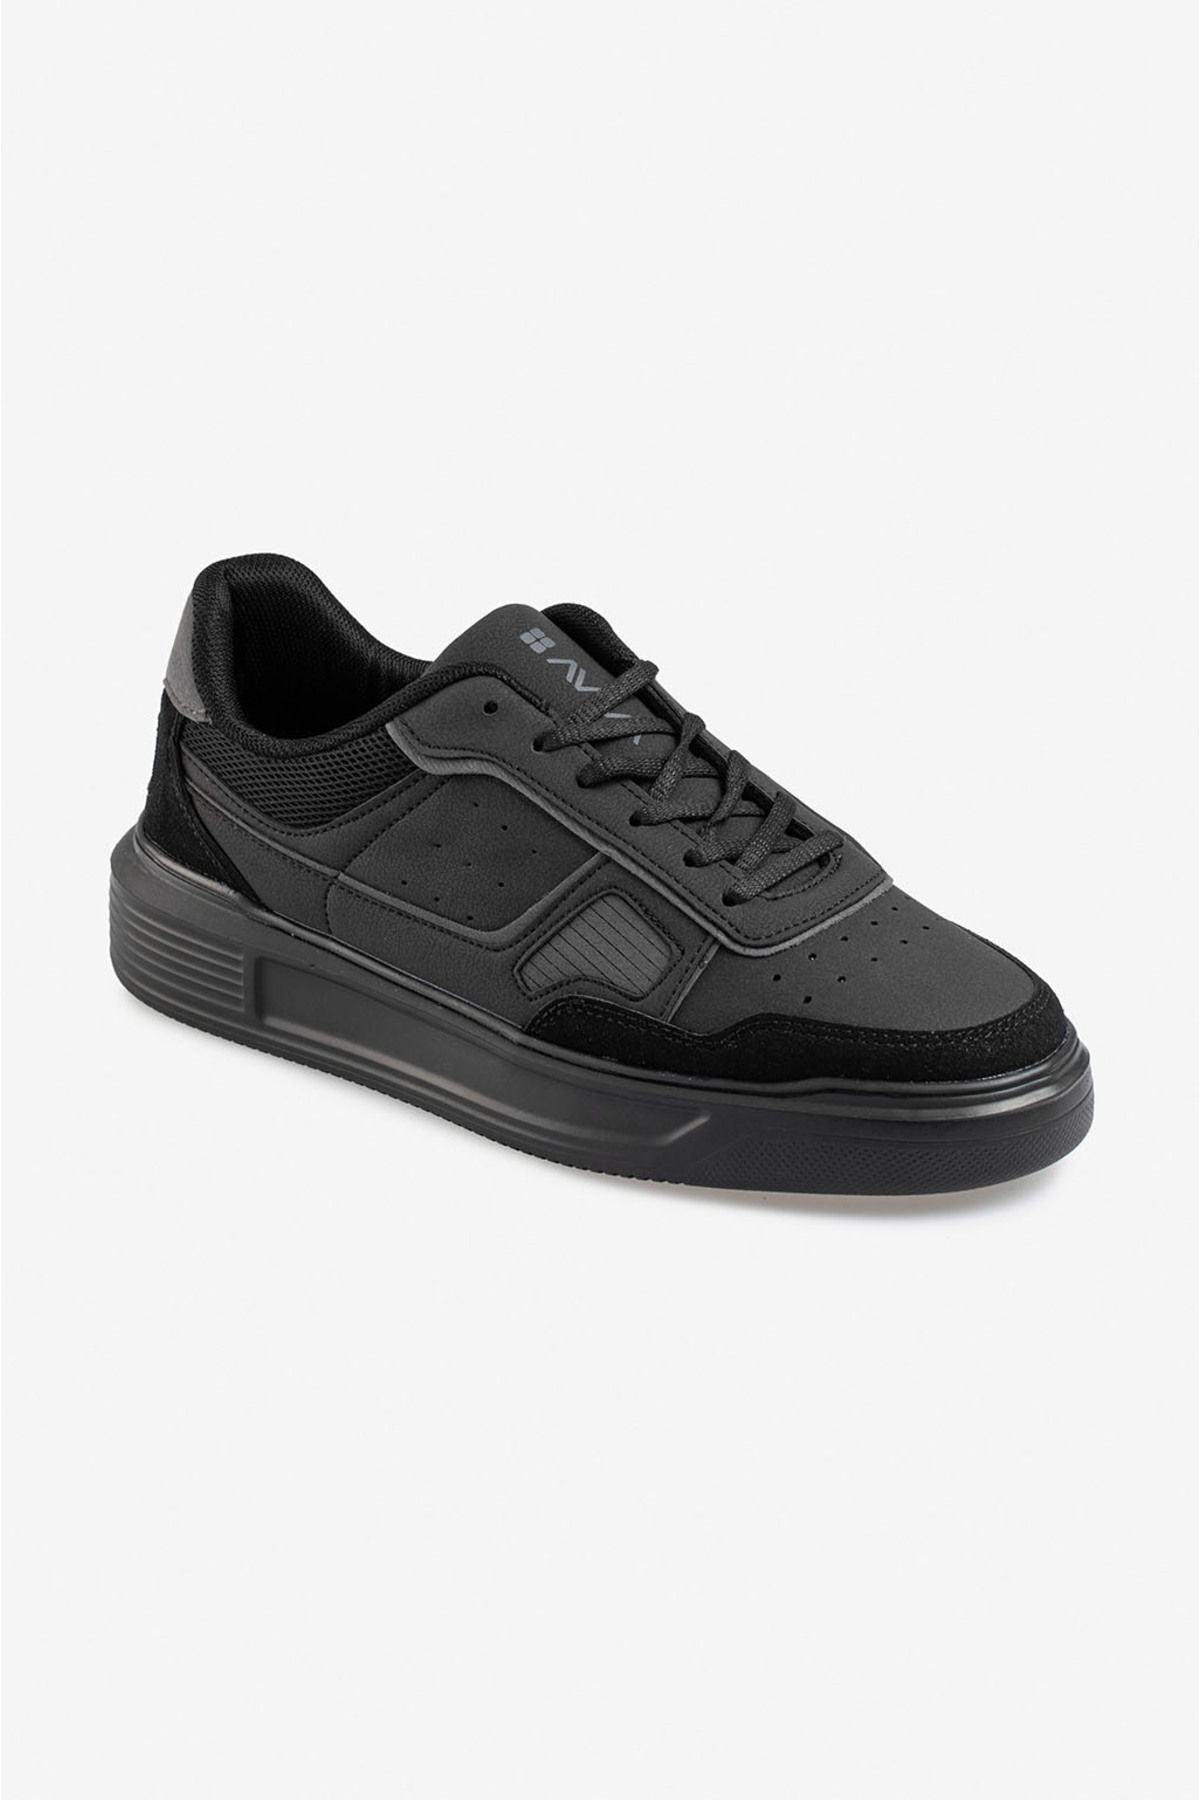 Avva Erkek Siyah Süet Detaylı Sneaker A22y8032